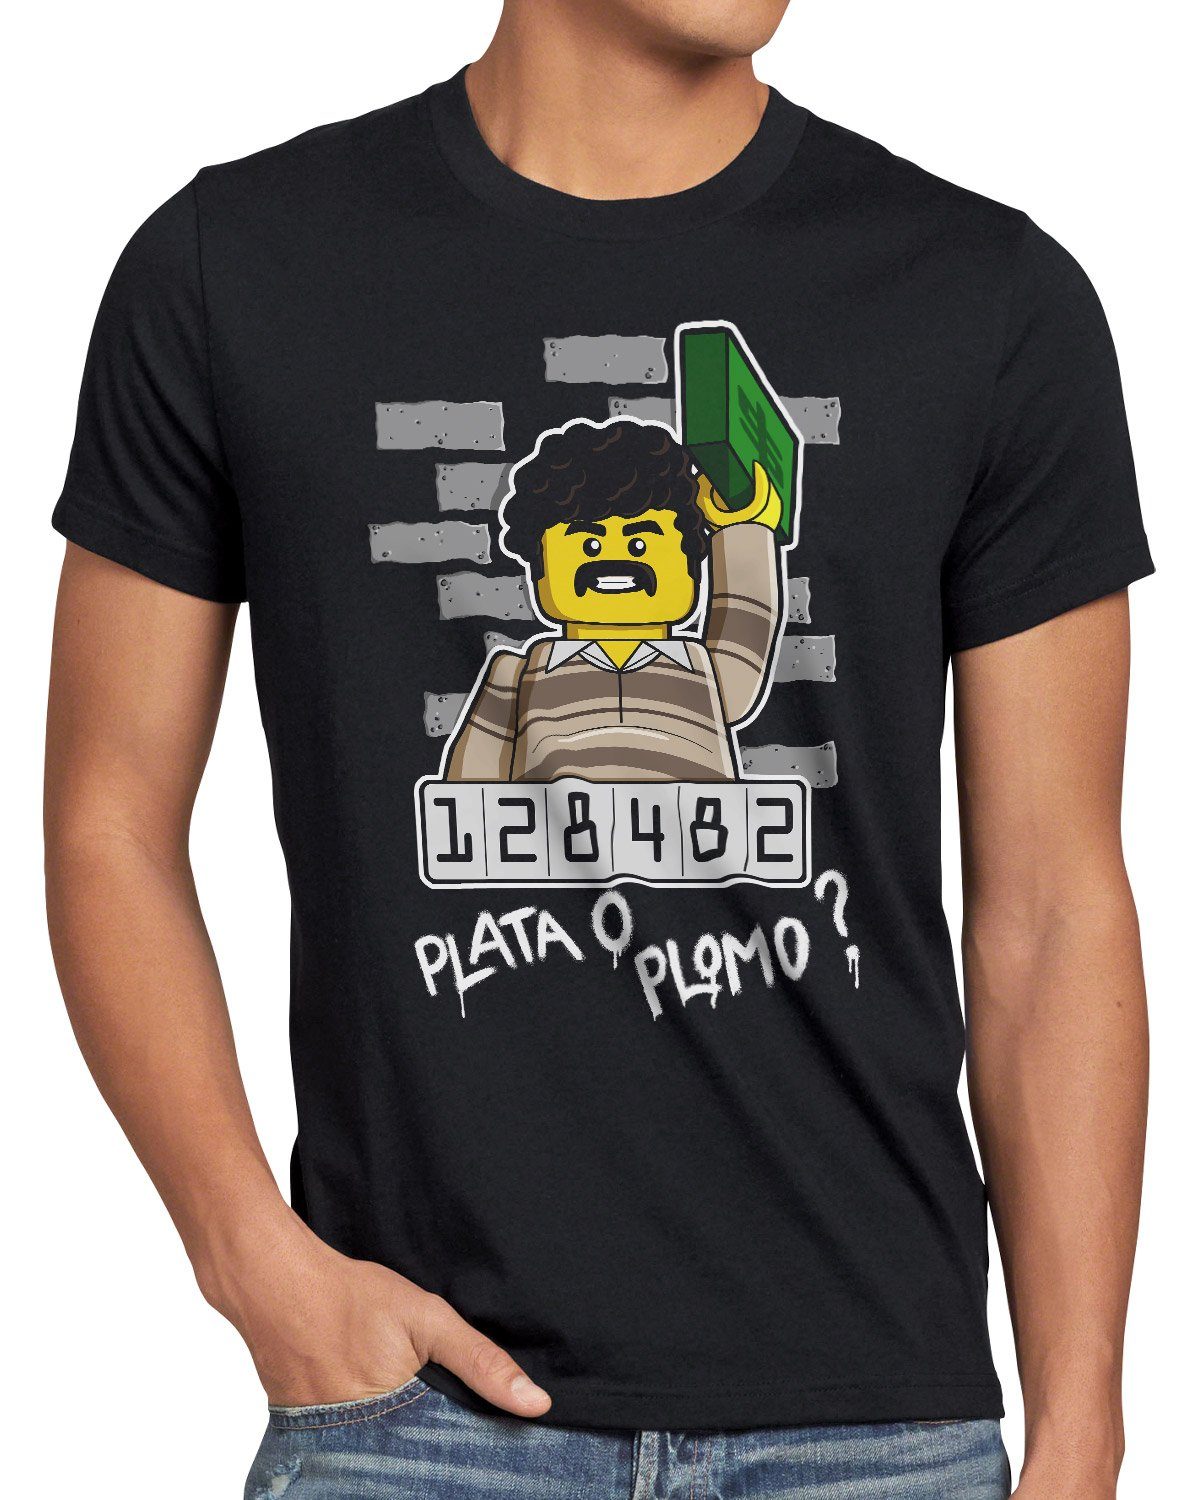 Sonderverkauf bis zu 70 % Rabatt style3 Print-Shirt T-Shirt Plomo o Herren schwarz pablo kokain bloque Plata